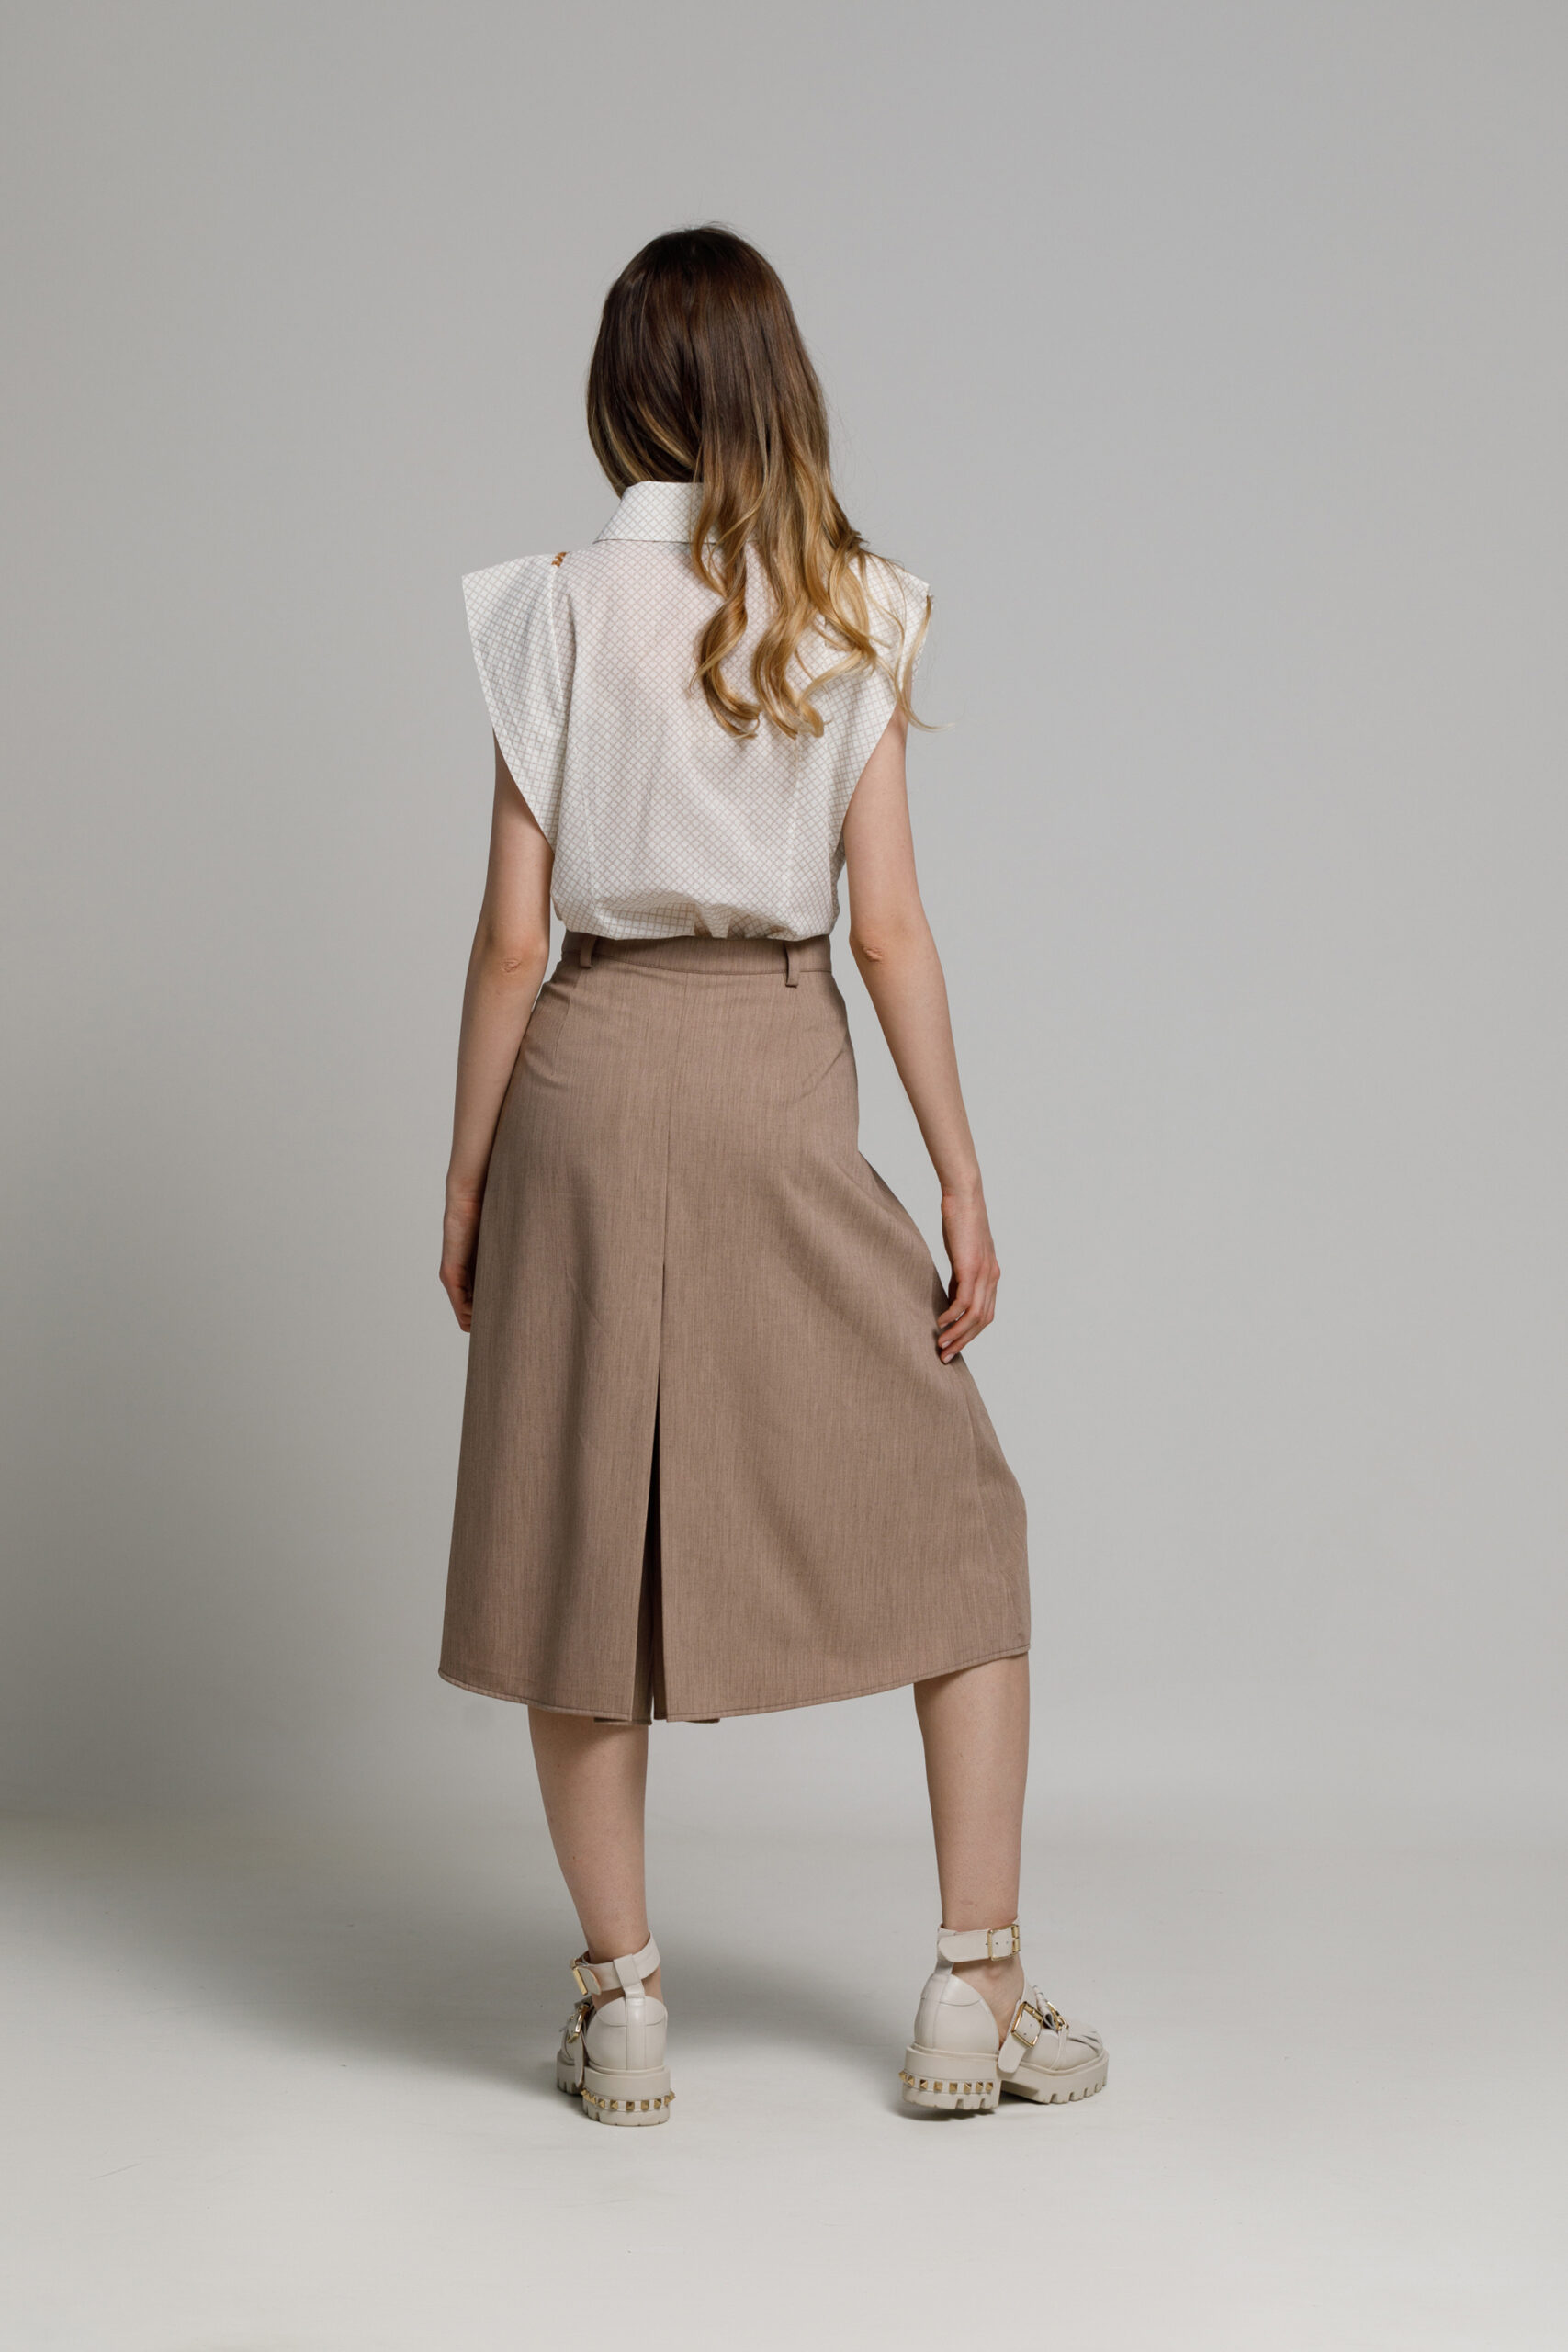 NEVIN Skirt - Pantalon in beige fabric. Natural fabrics, original design, handmade embroidery